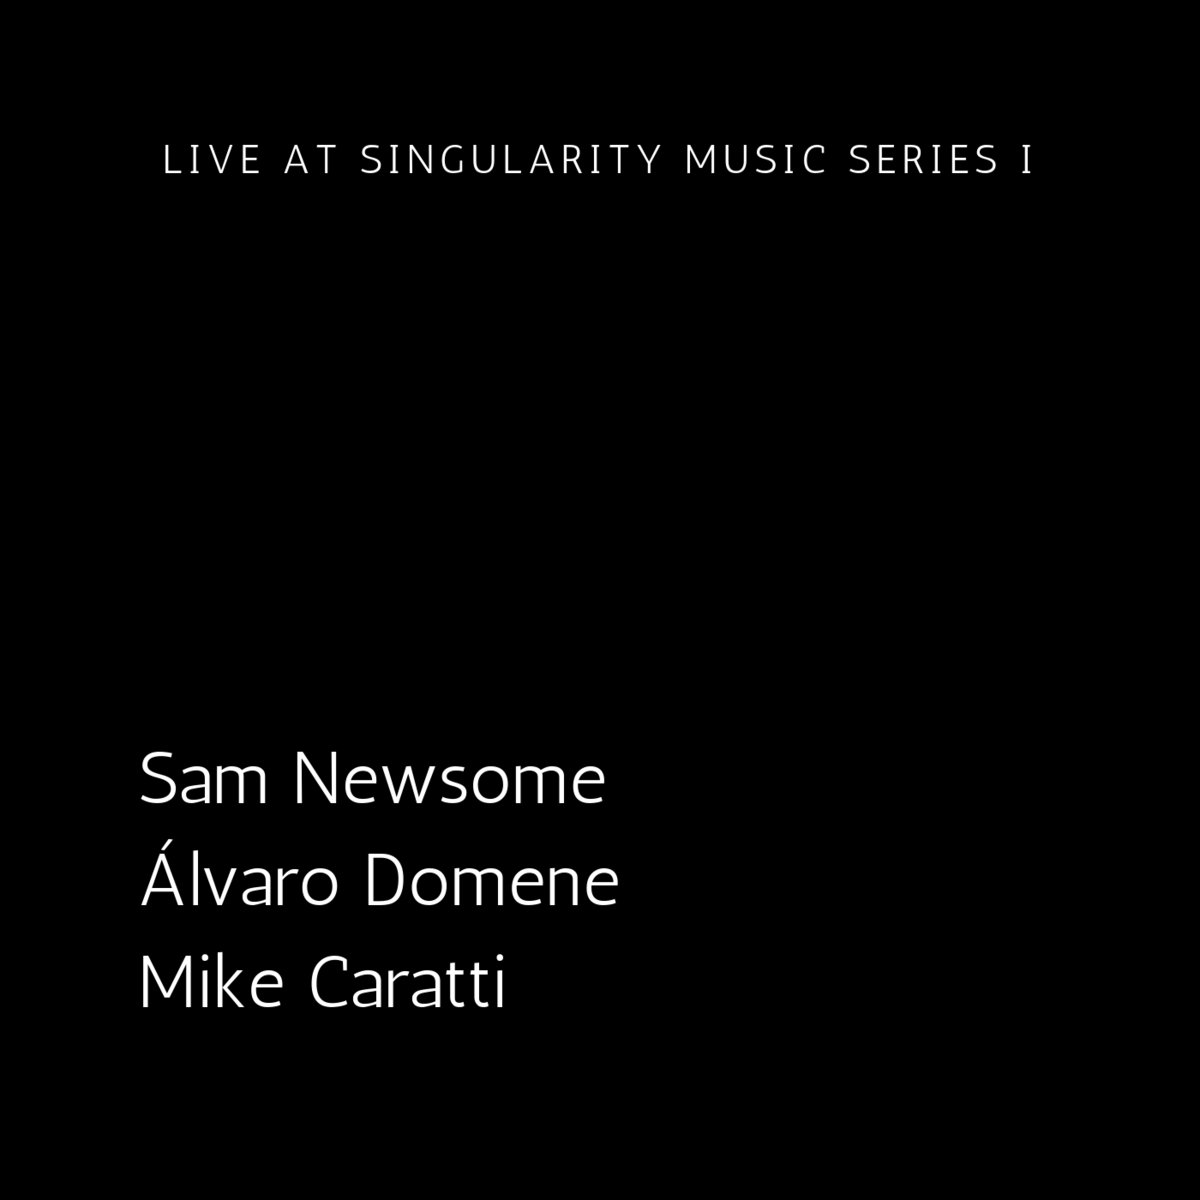  Live at Singularity Music Series I by Sam Newsome / Álvaro Domene / Mike Caratti